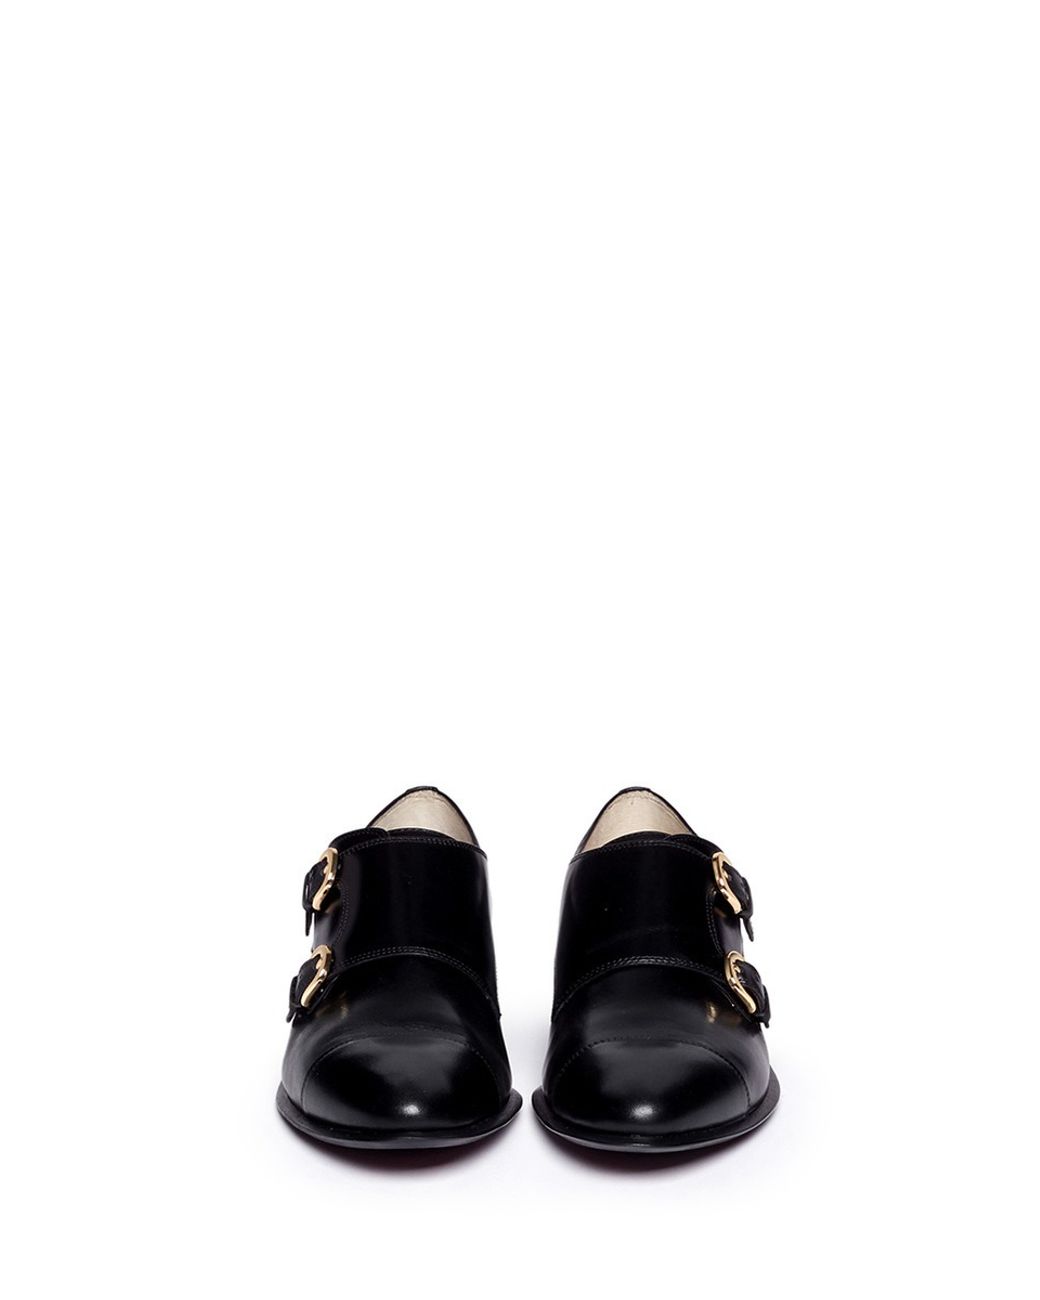 Sam Edelman 'balfour' Leather Monk Strap Shoes in Black | Lyst